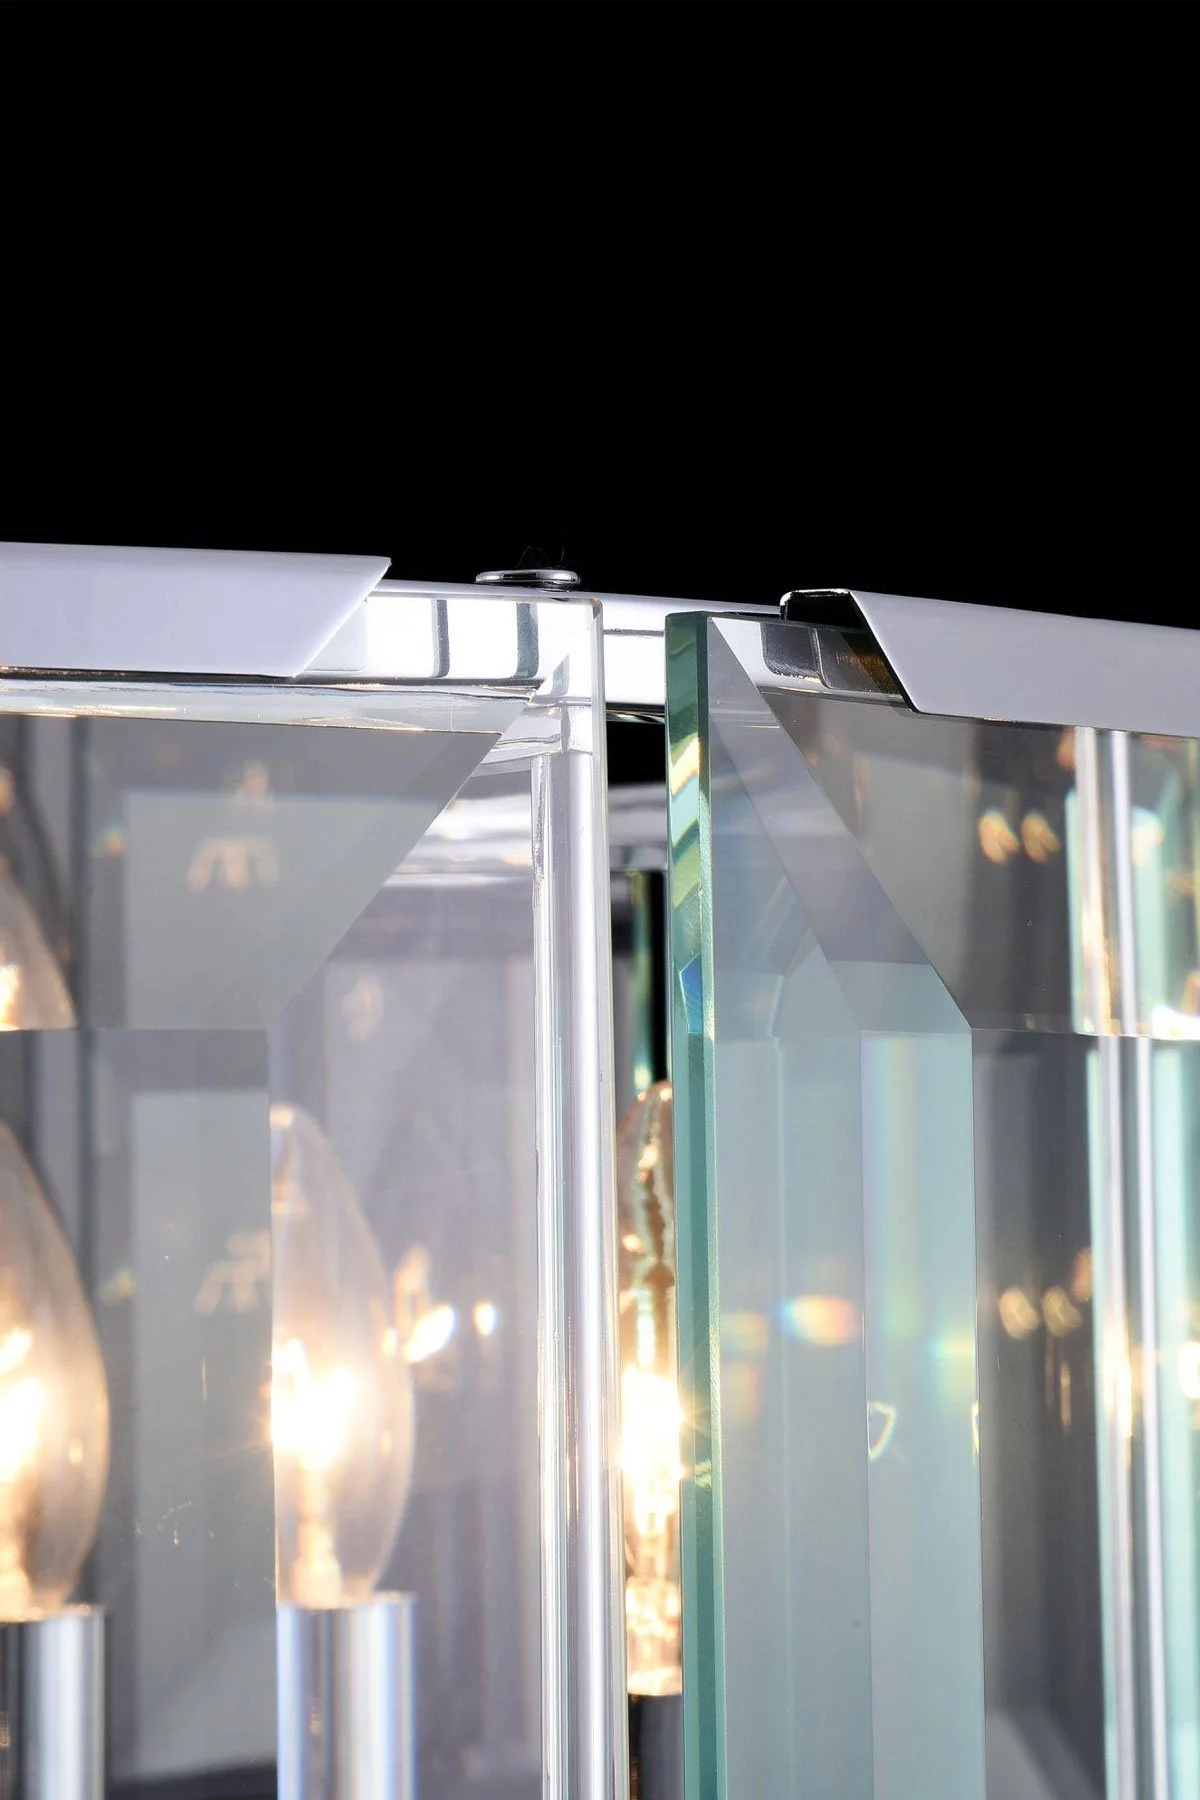   
                        
                        Люстра MAYTONI (Германия) 12243    
                         в стиле Модерн.  
                        Тип источника света: светодиодная лампа, сменная.                         Форма: Цилиндр.                         Цвета плафонов и подвесок: Прозрачный.                         Материал: Стекло.                          фото 8